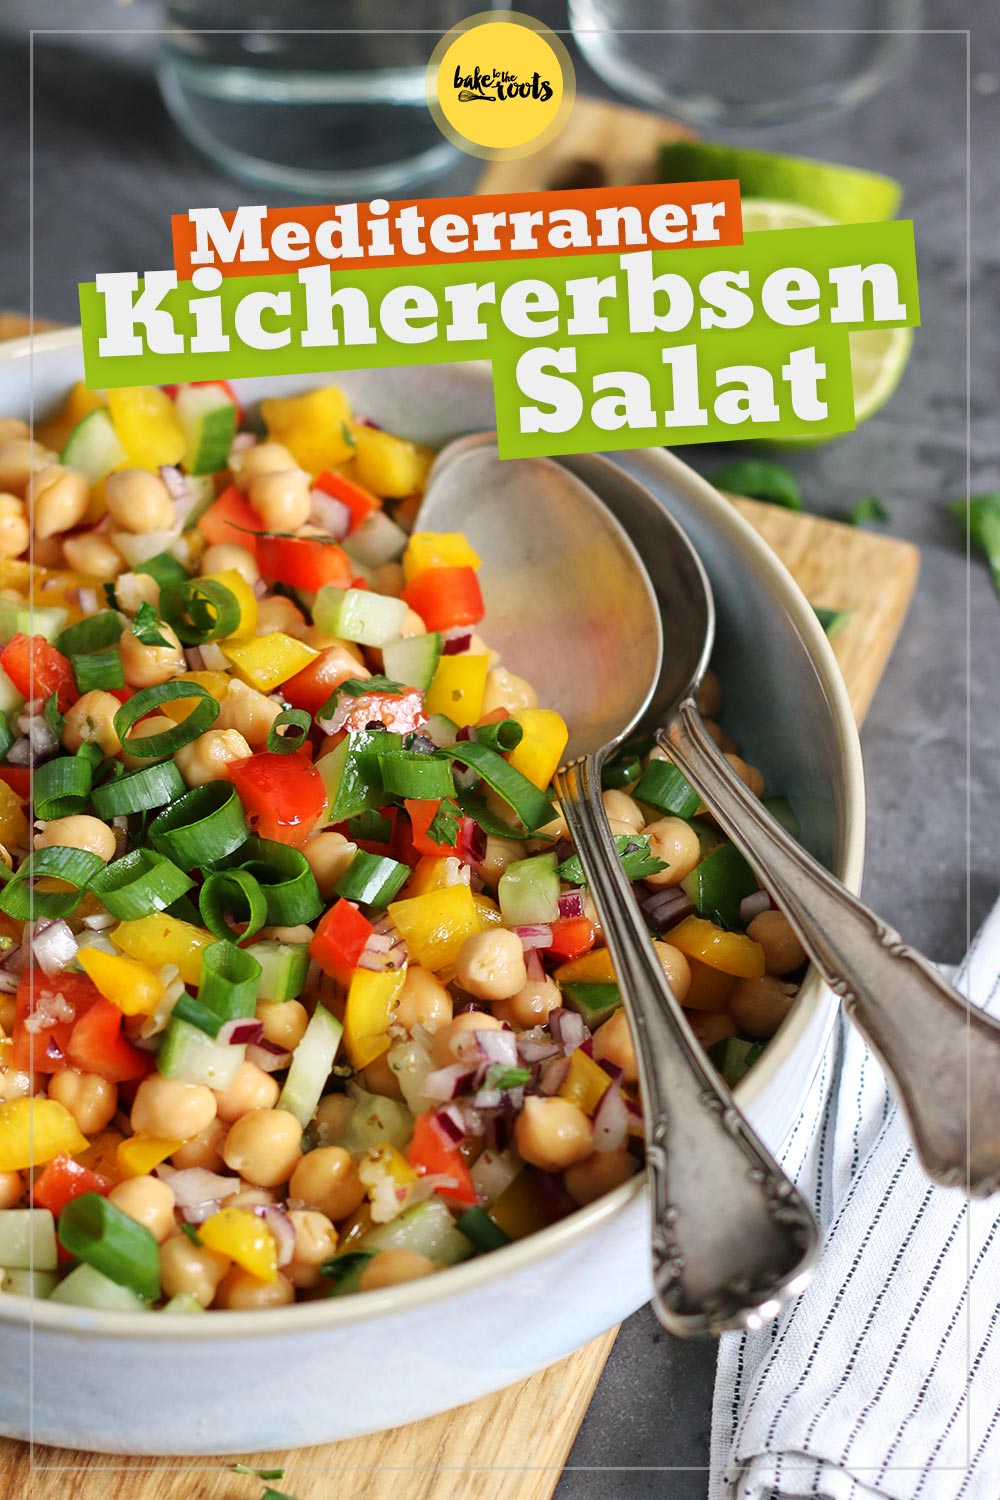 Mediterraner Kichererbsen Salat | Bake to the roots